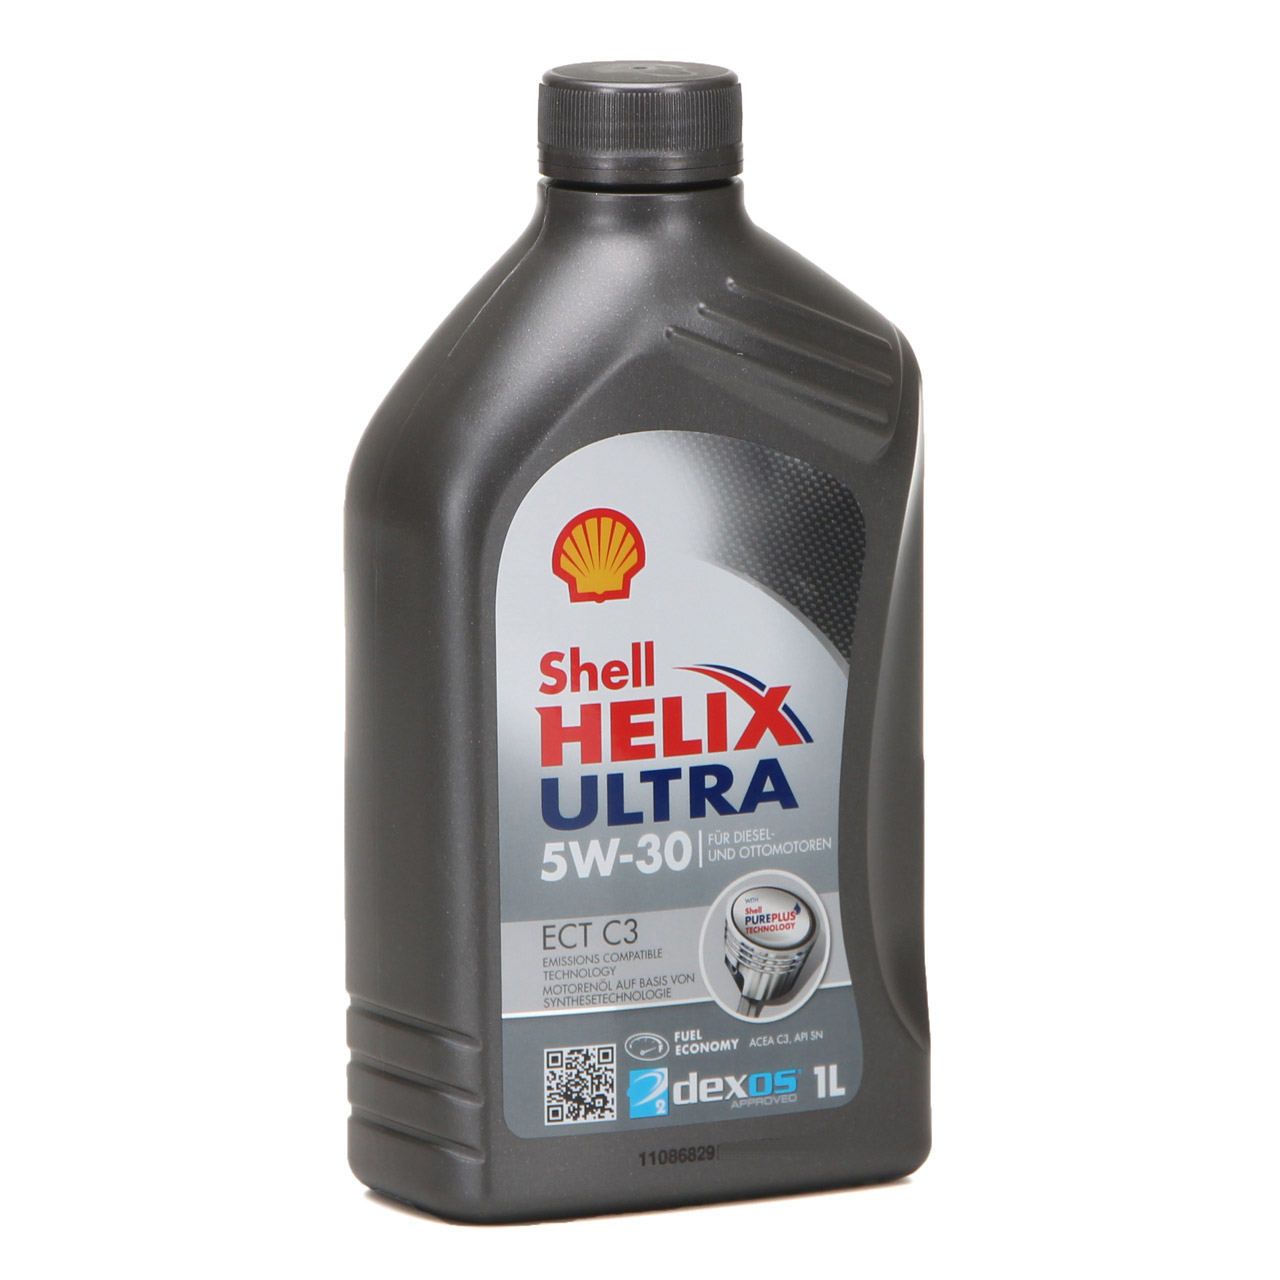 6L 6 Liter SHELL Motoröl Öl HELIX ULTRA ECT C3 5W30 dexos2 BMW LL-04 MB 229.51